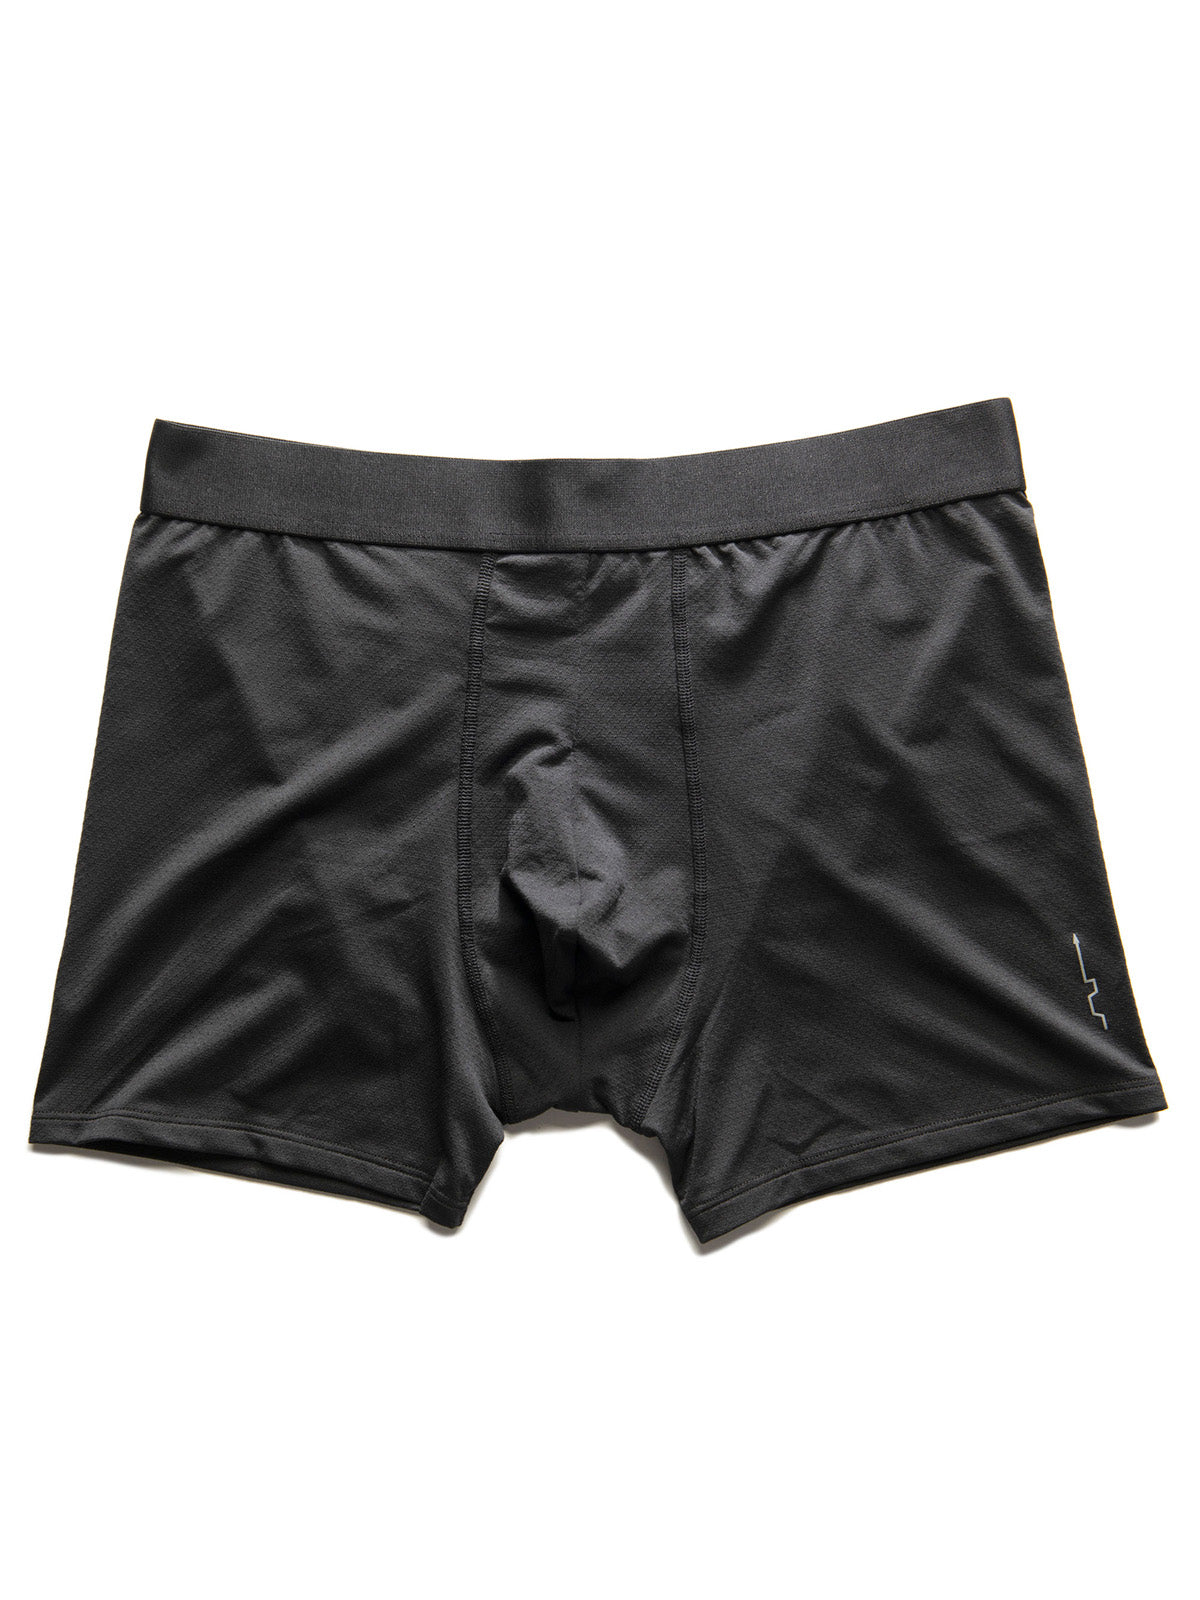 Athletic Works Men's Underwear Compression Pants 